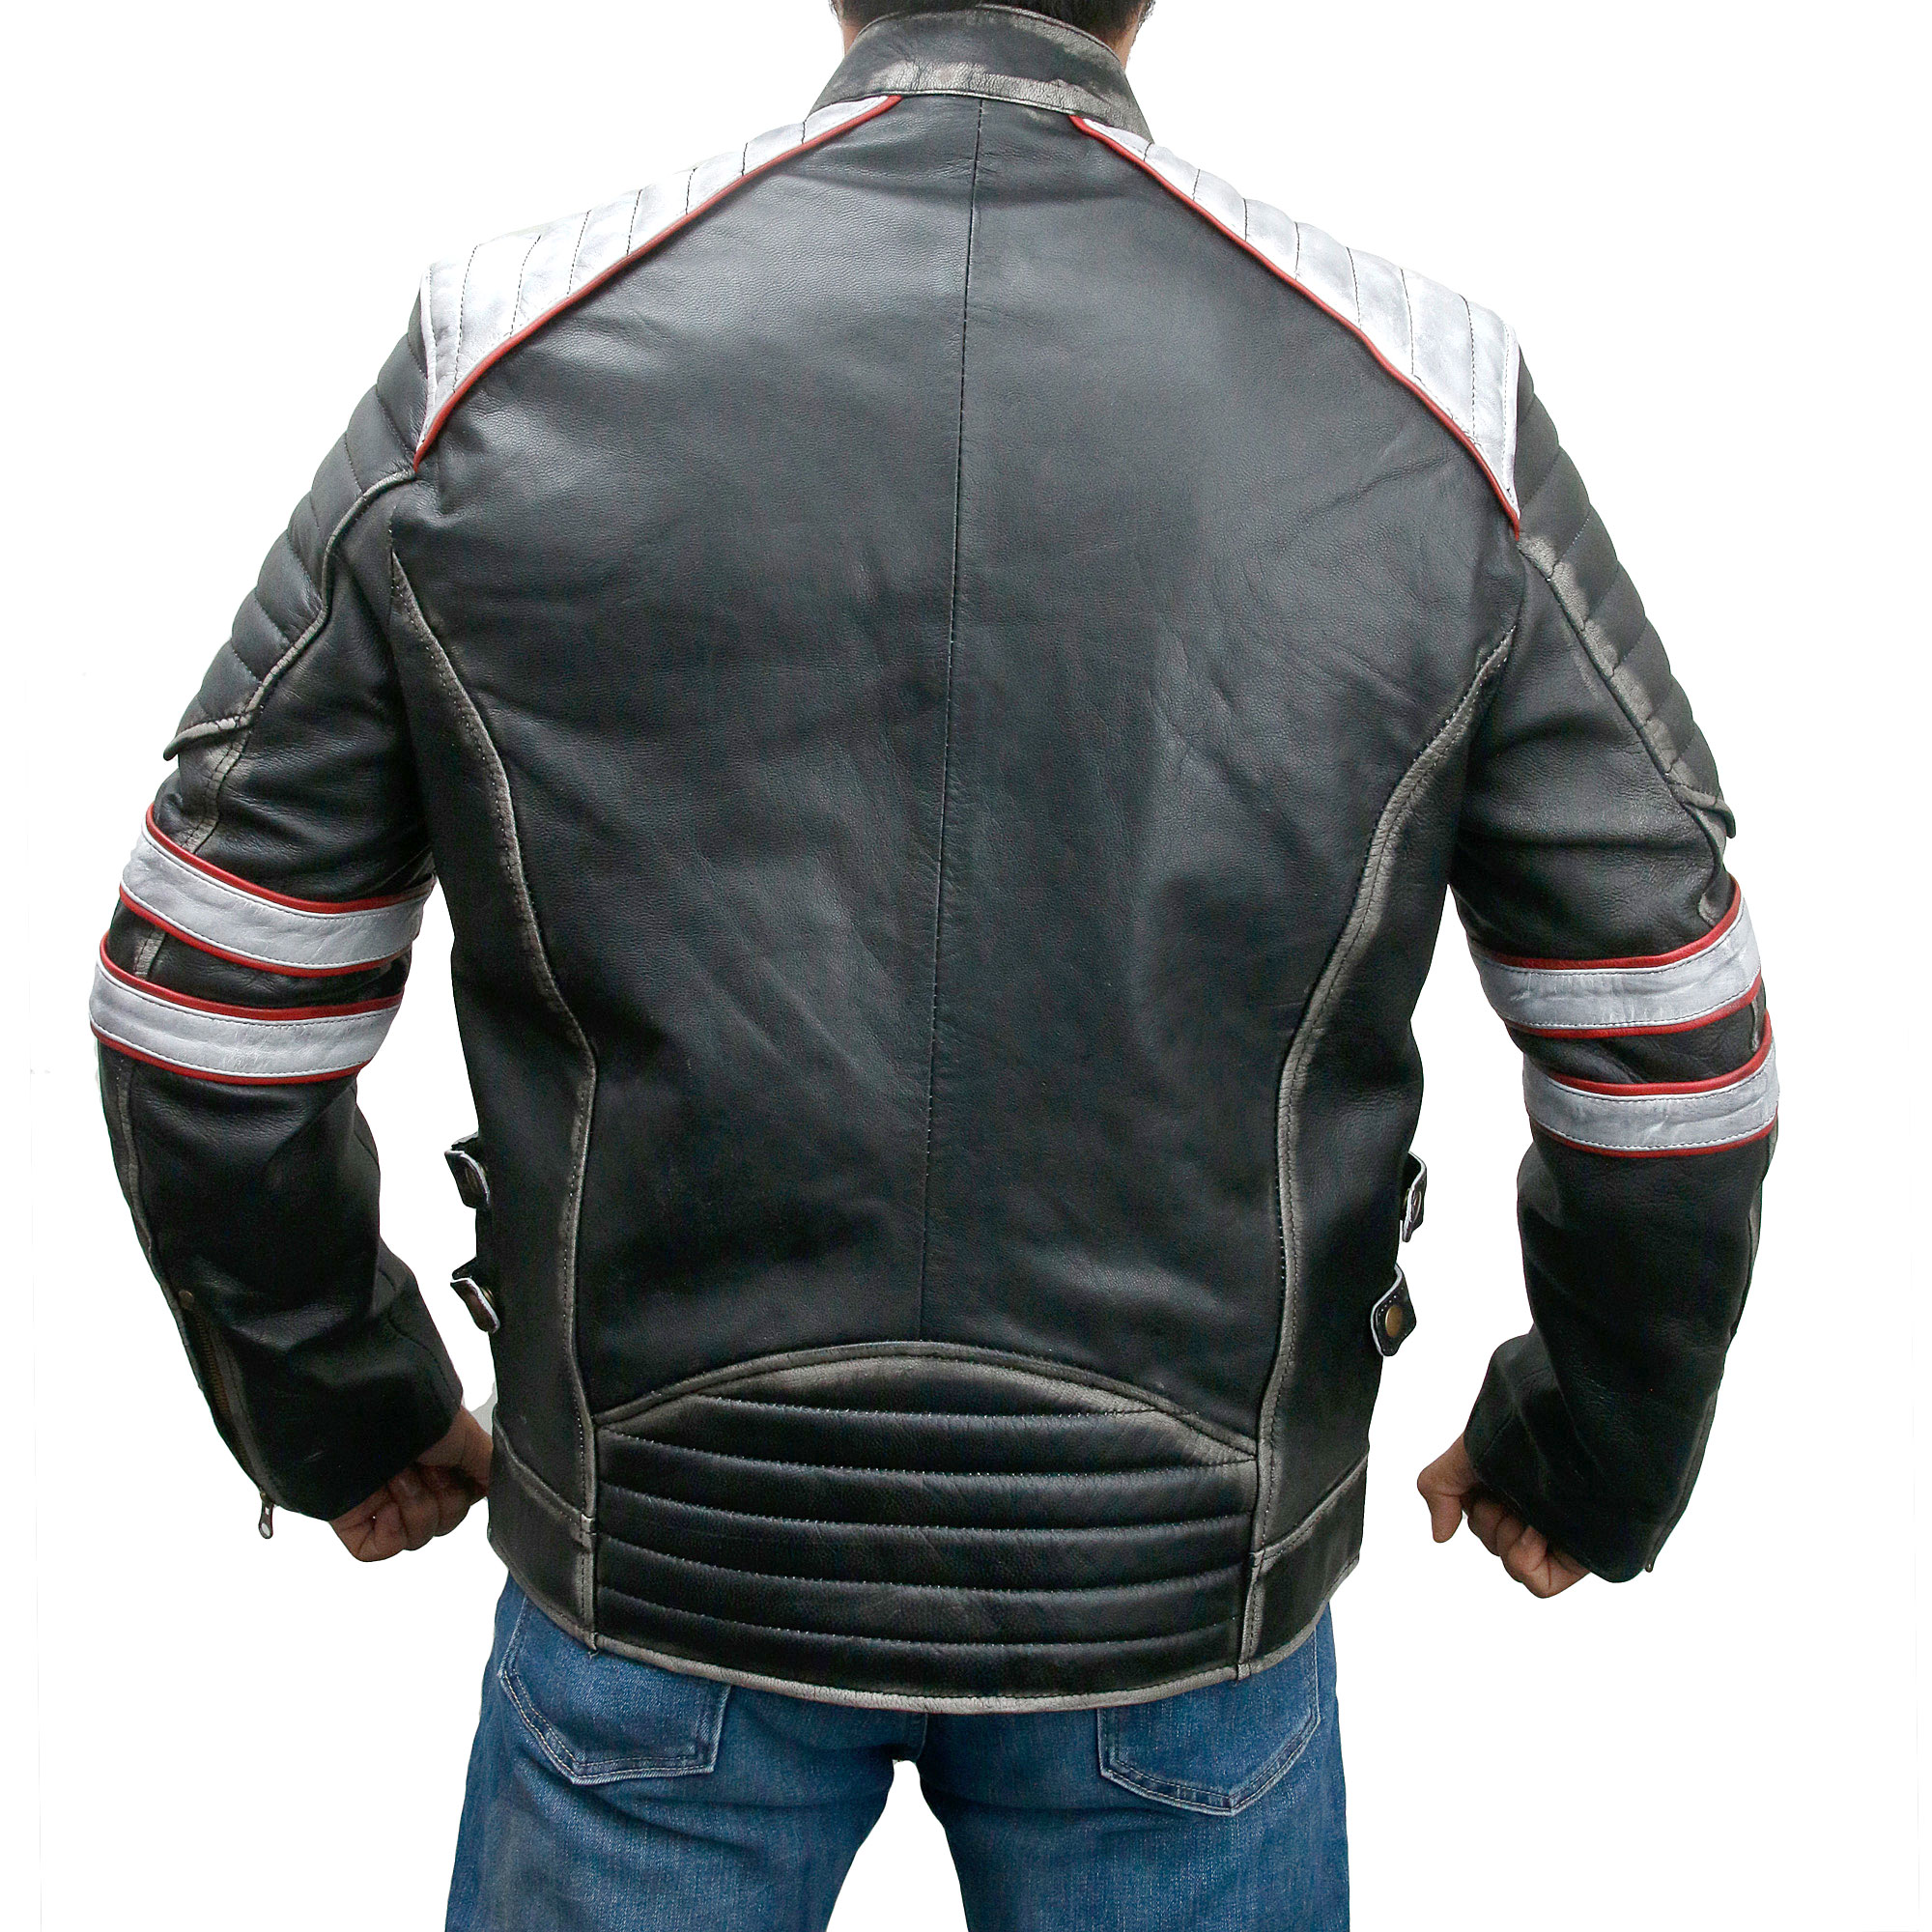 Men's Retro Style Cafe Racer Distressed Black Leather Biker Jacket